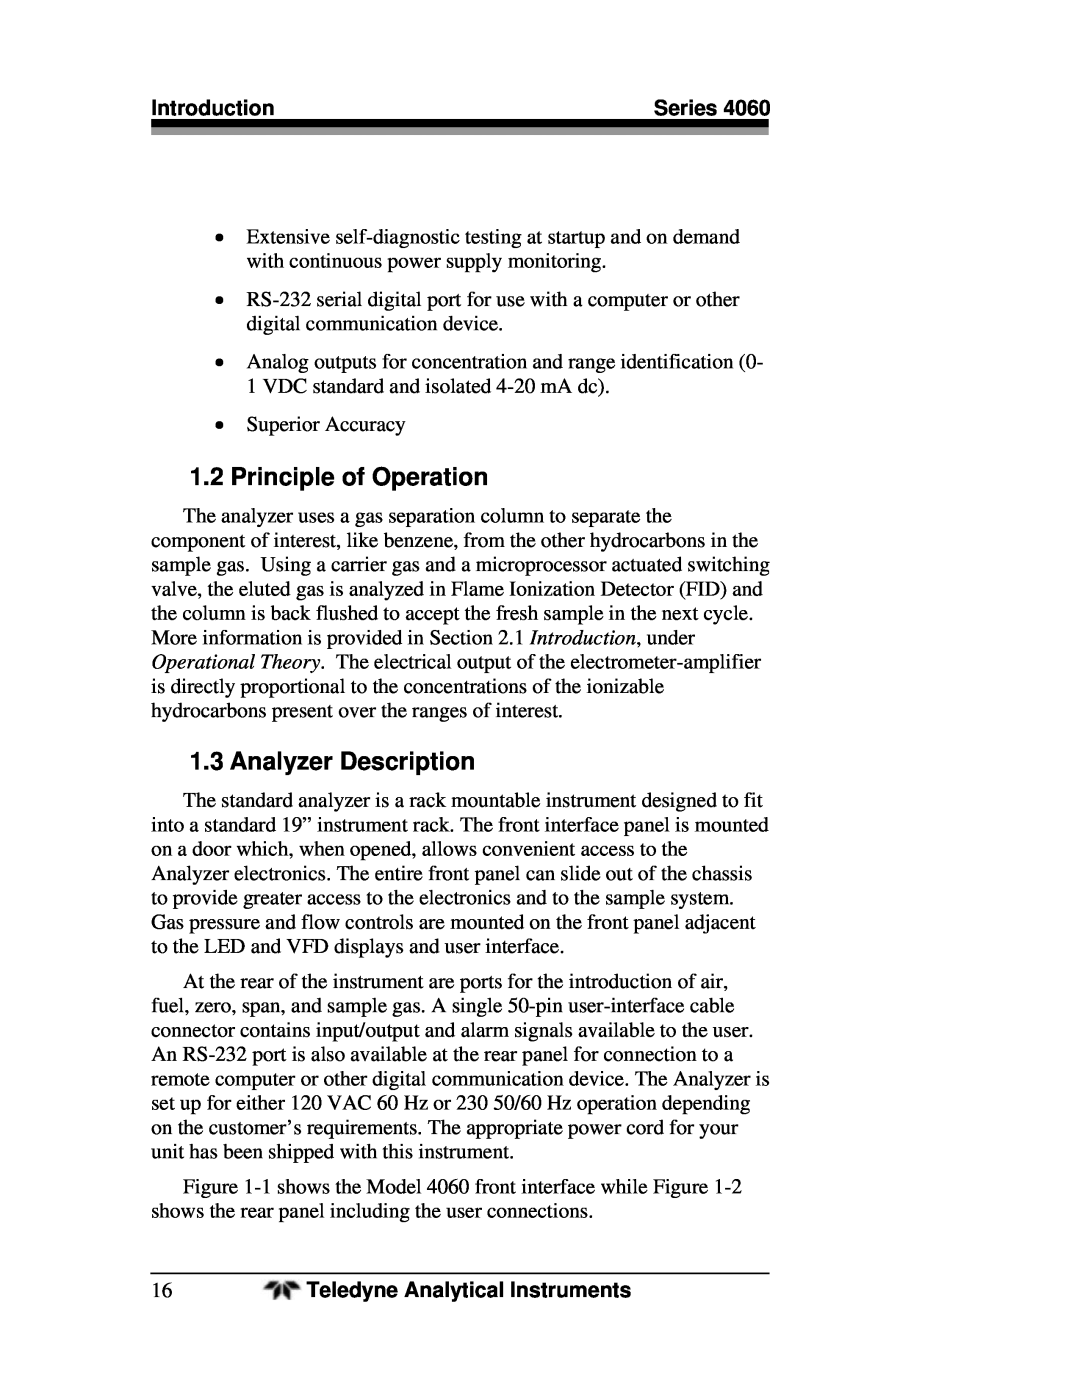 Teledyne 4060 manual Principle of Operation, Analyzer Description 